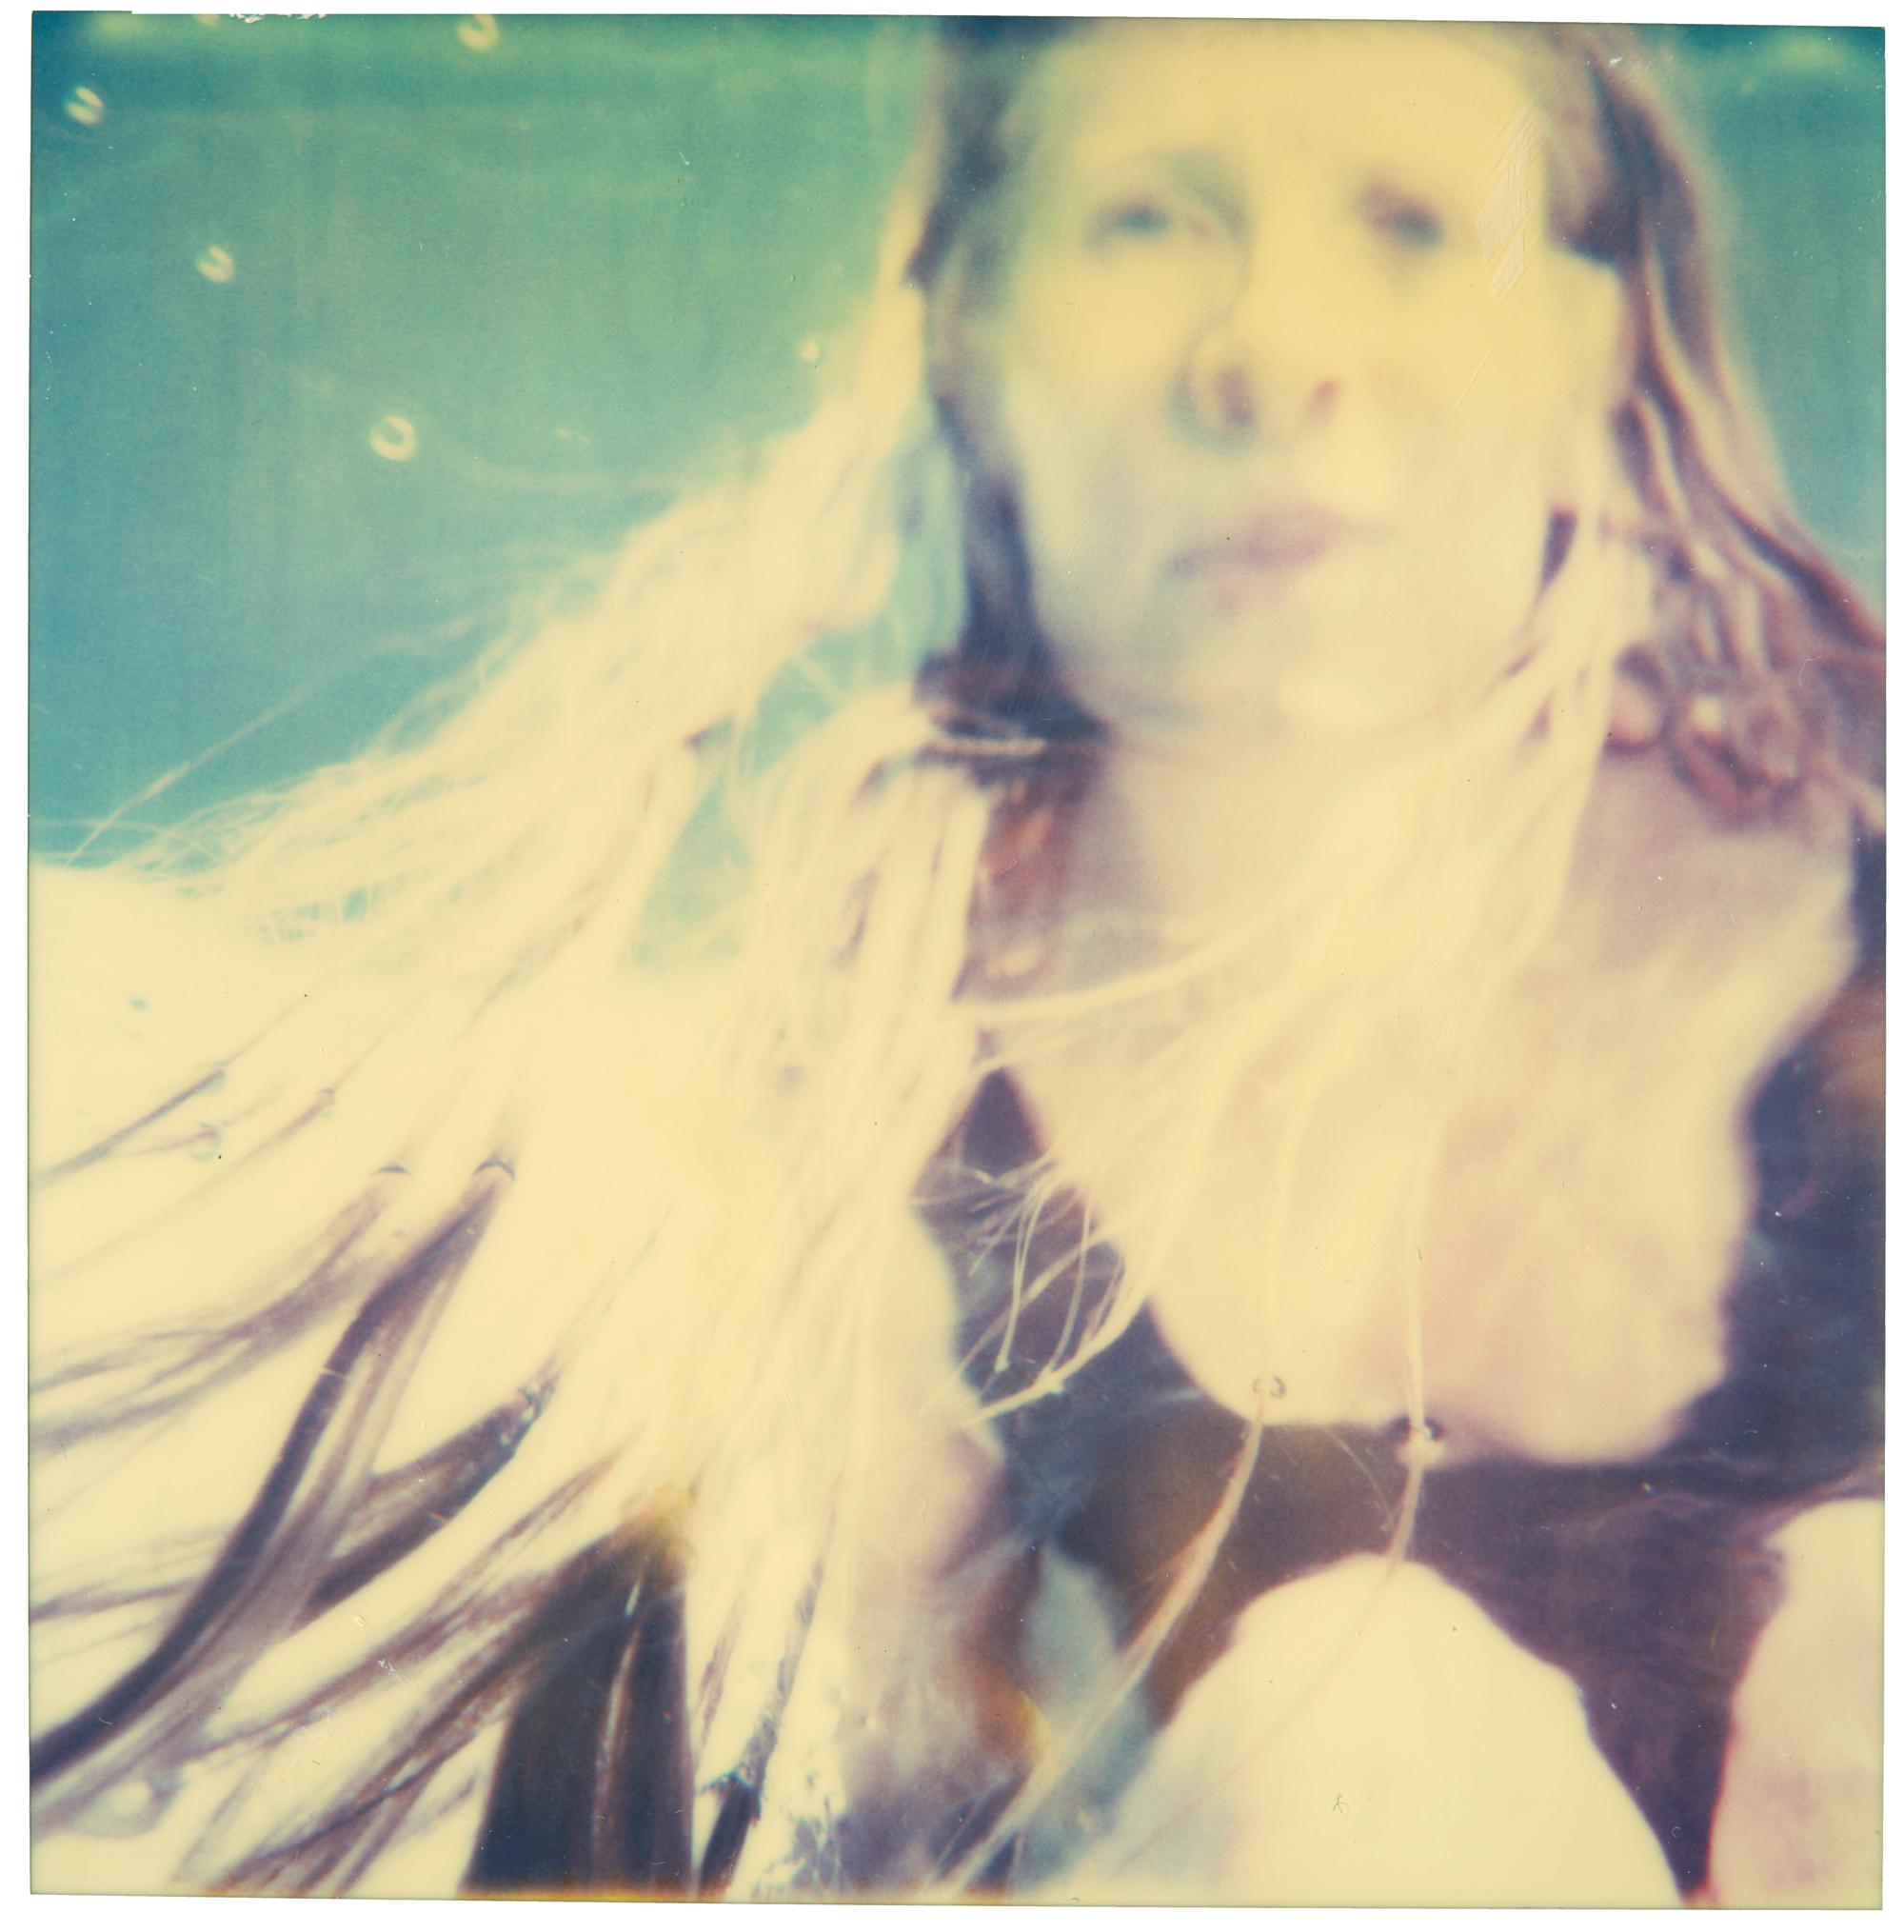 Stefanie Schneider Color Photograph - Under Water (The Last Picture Show)